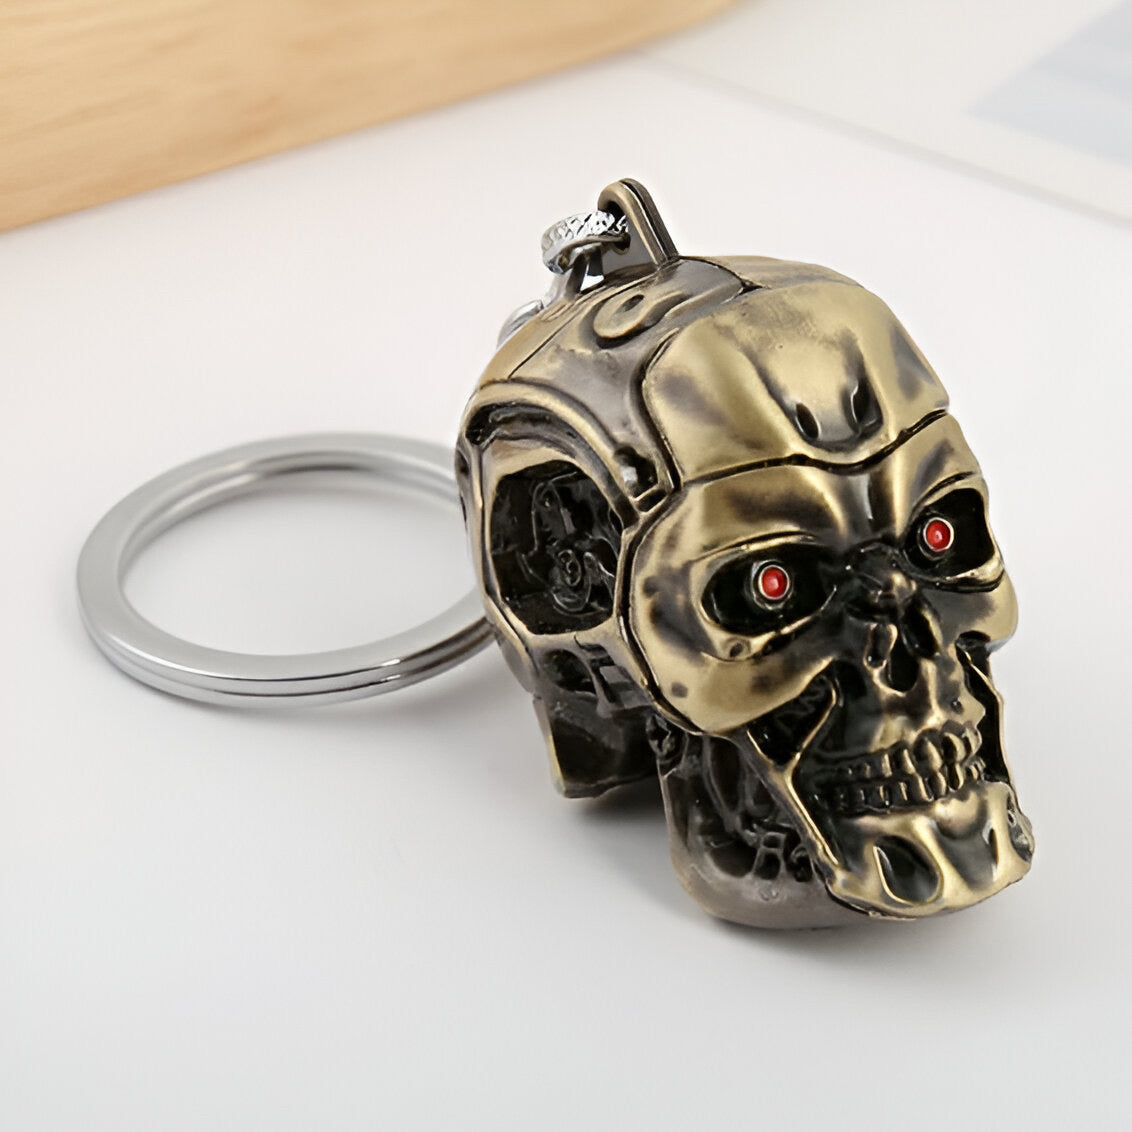 Terminator Keychain